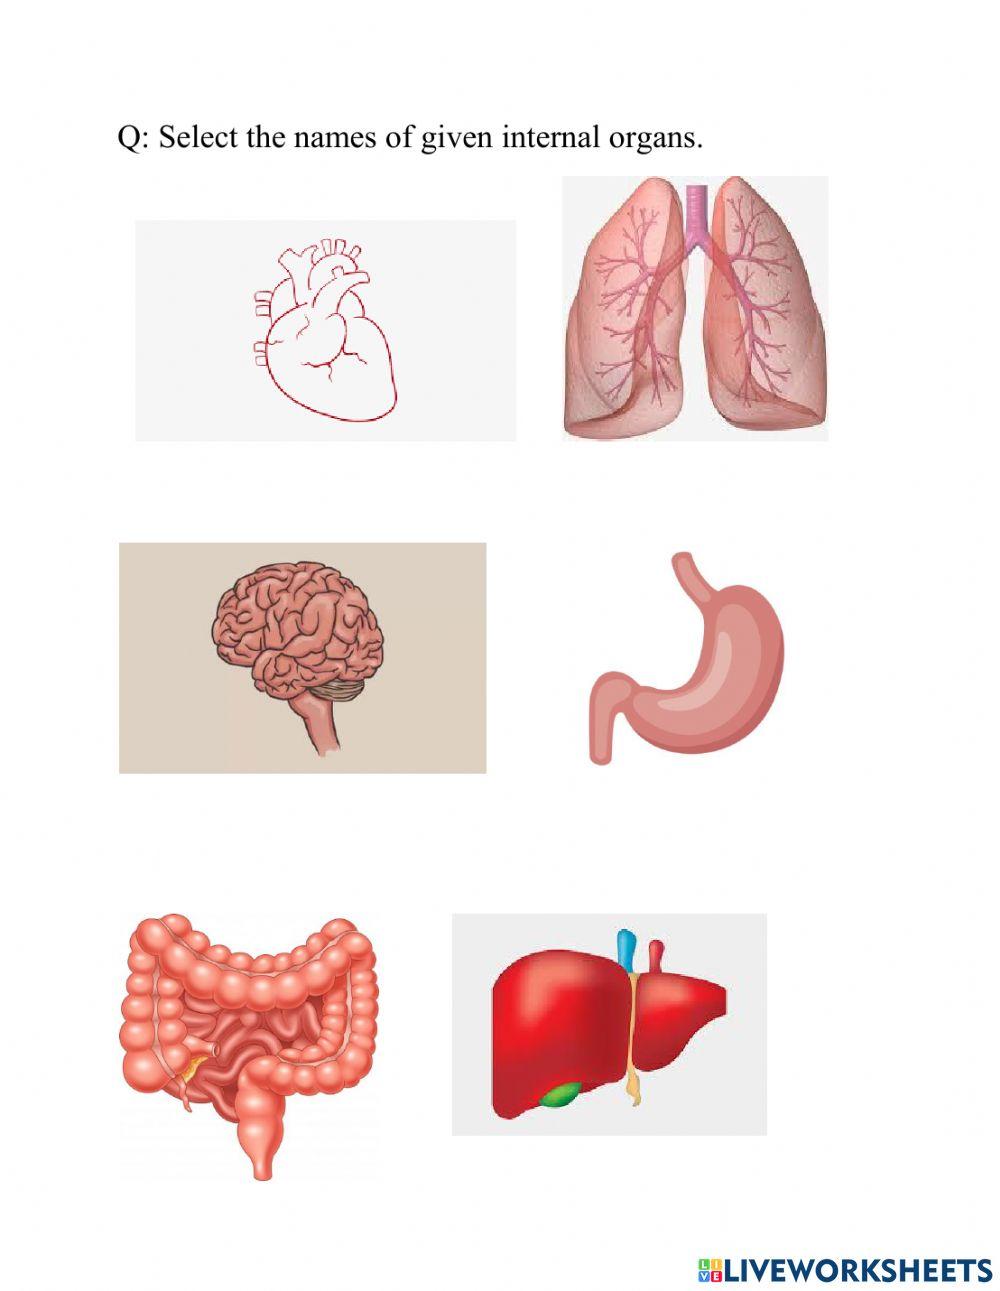 Names of internal organs